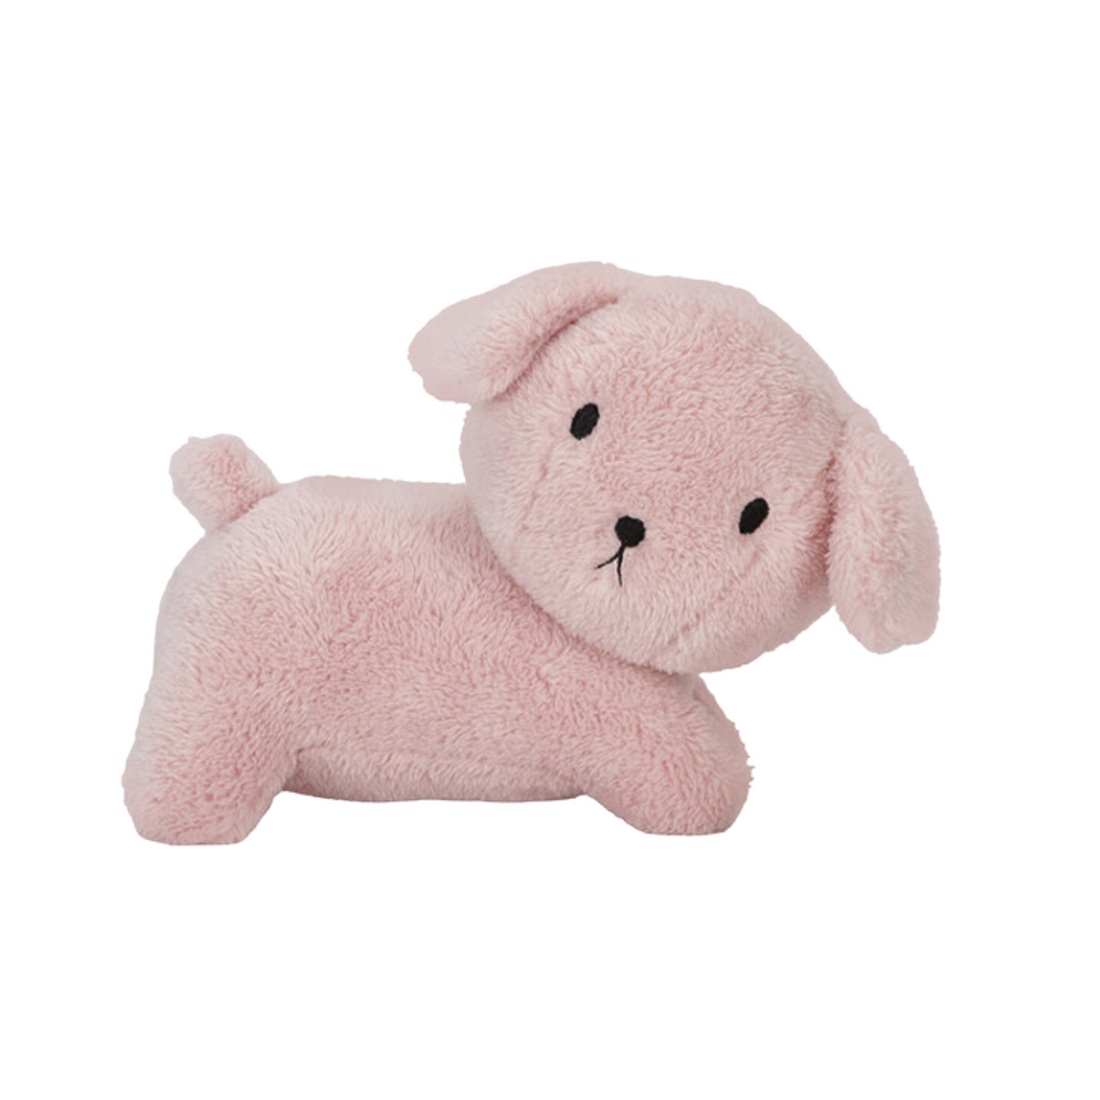 Plush puppy - Fluffy Pink